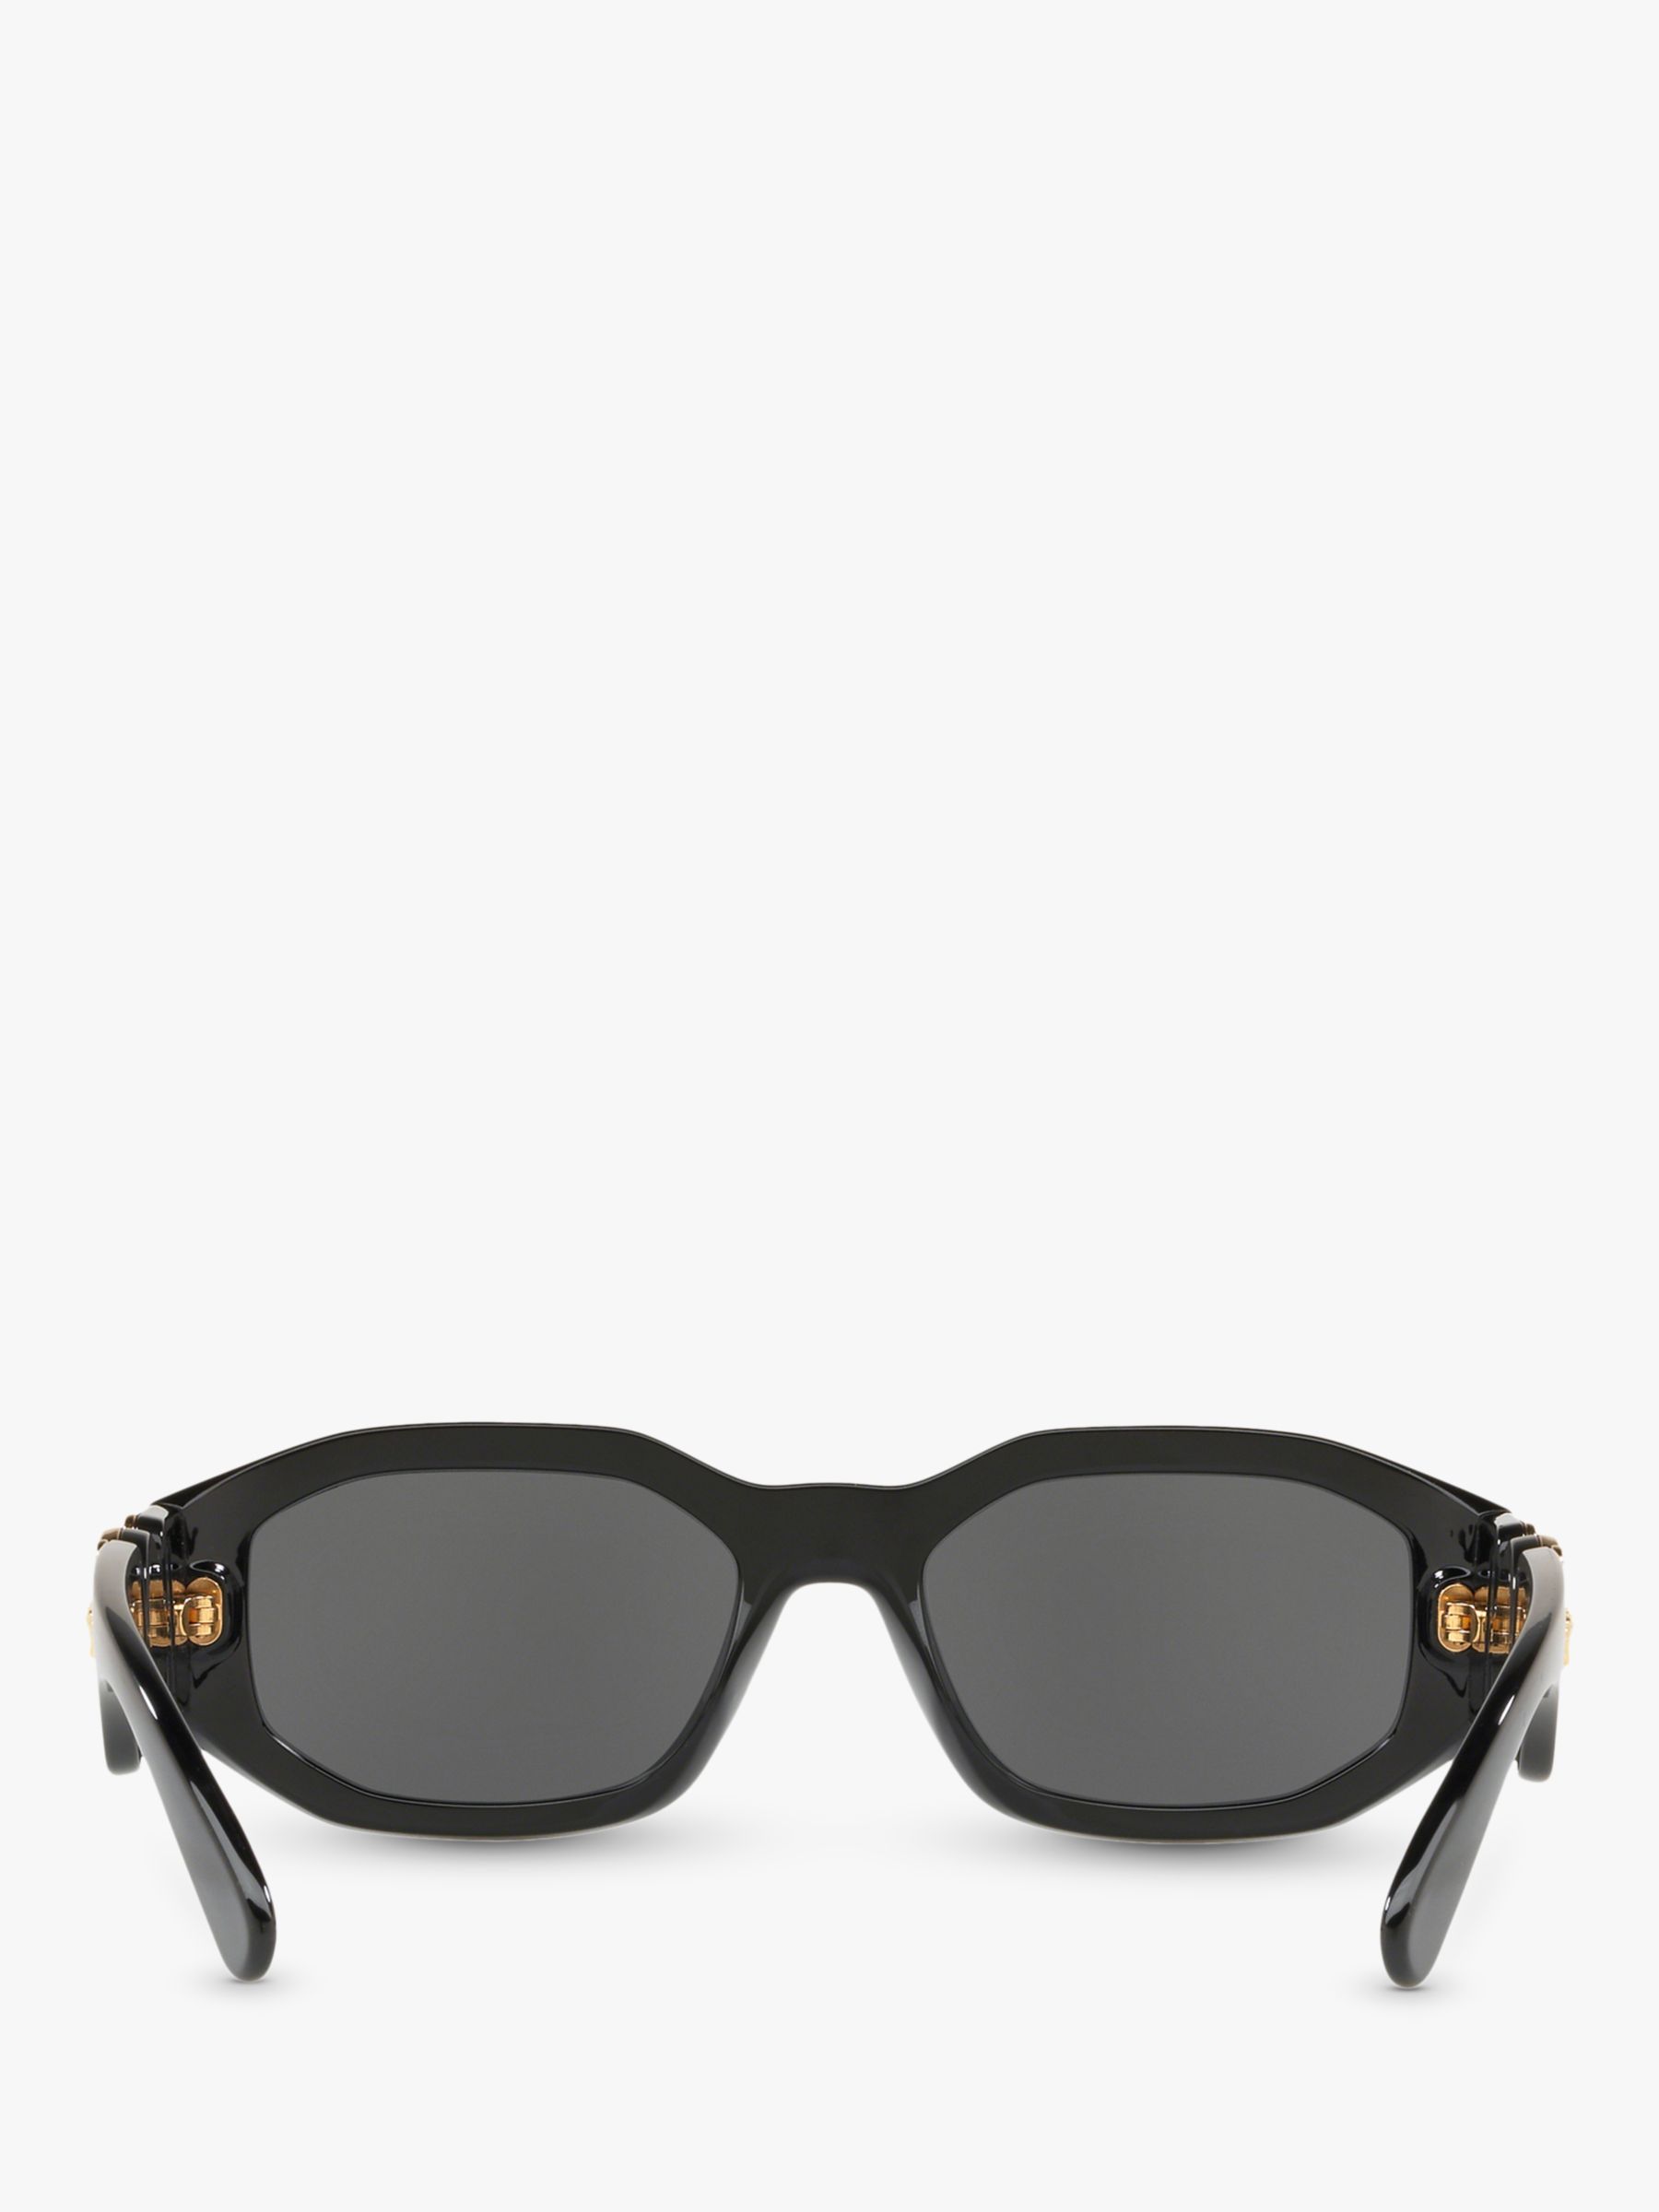 Versace VE4361 Women's Square Sunglasses, Black/Grey